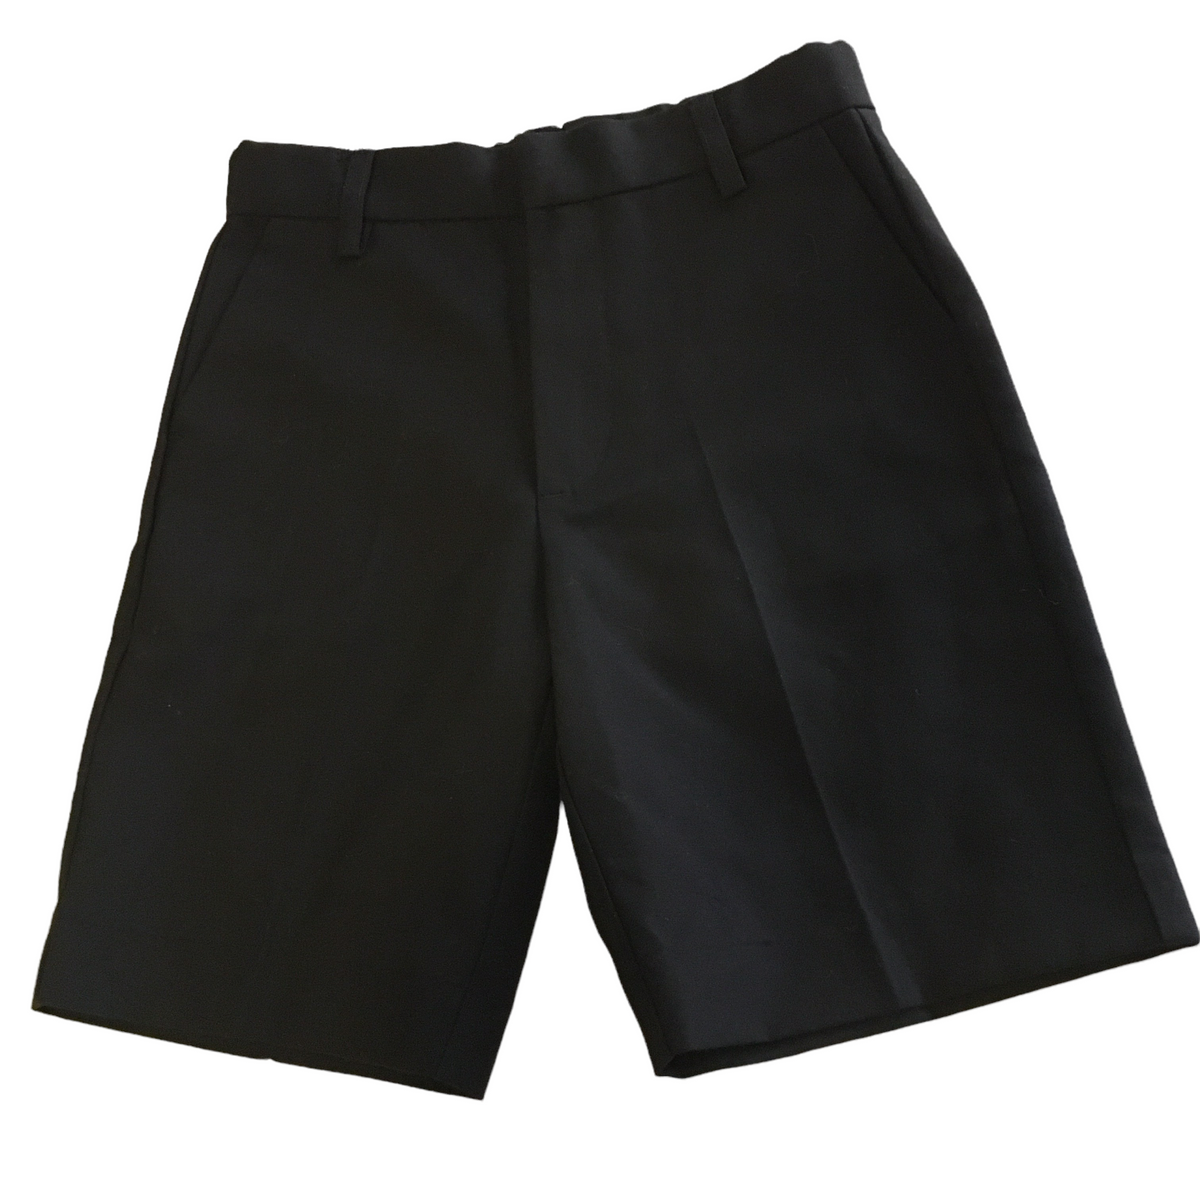 Nutmeg Black Smart School Shorts - Boys 6-7yrs – Growth Spurtz